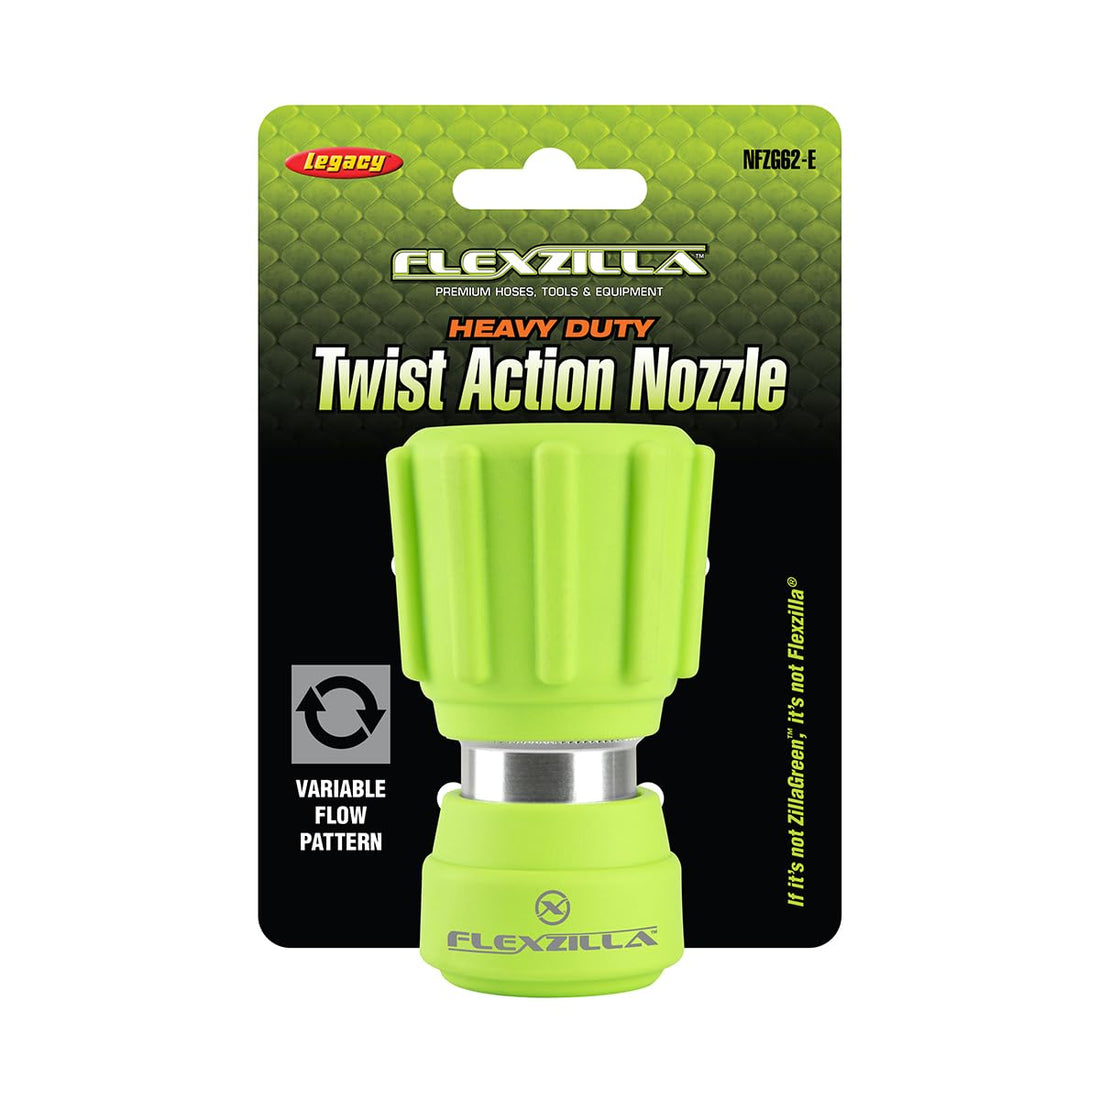 Flexzilla NFZG62 Twist Action Nozzle, Green